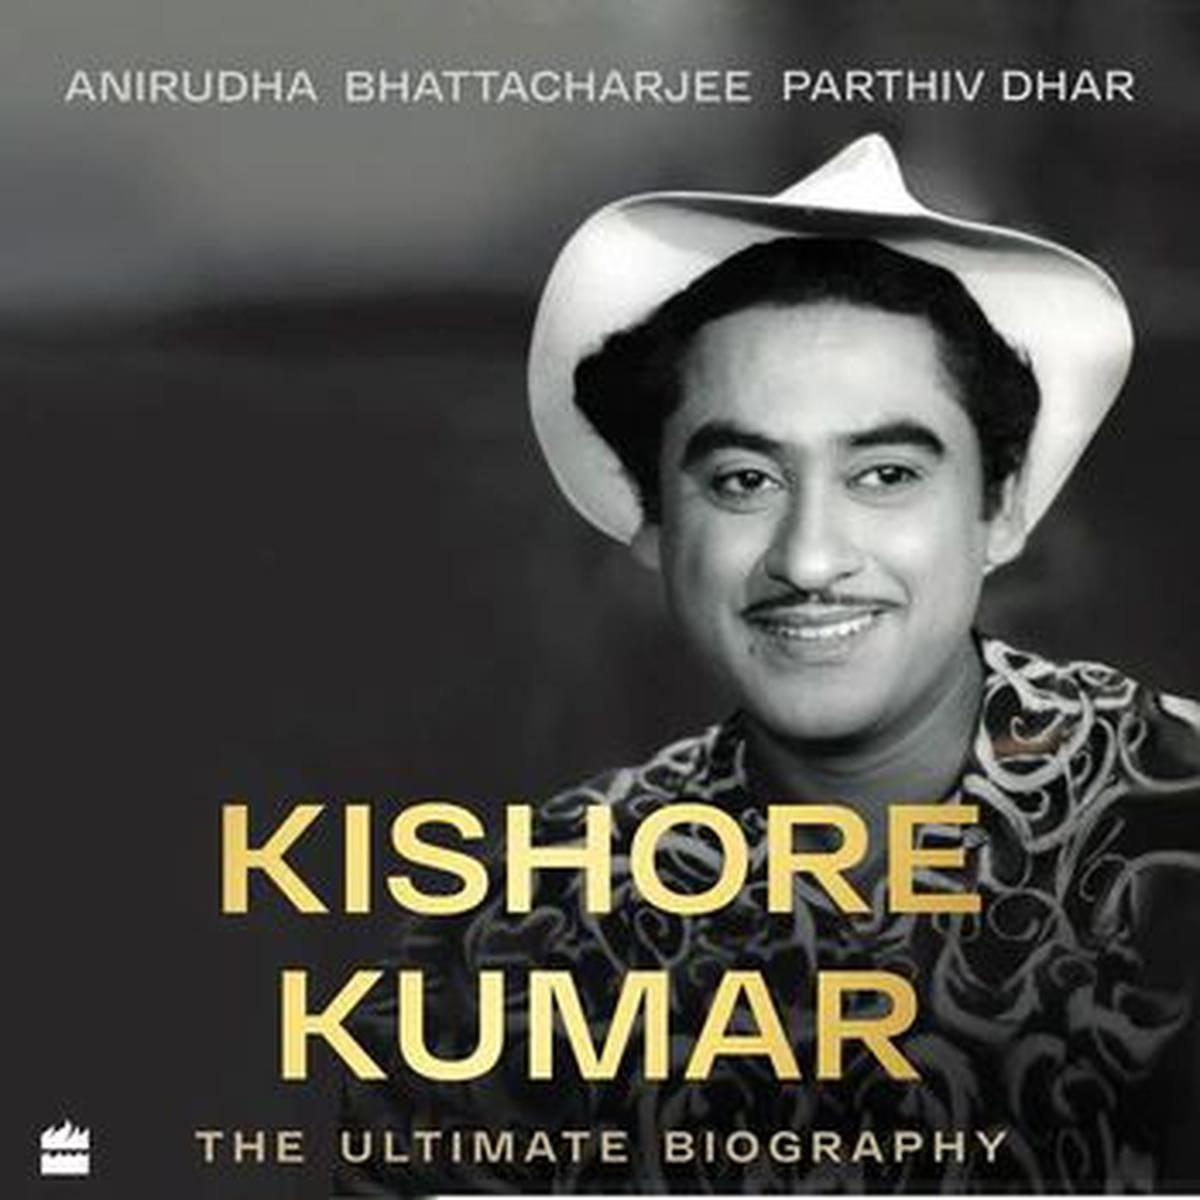 A new biography on the maverick singer Kishore Kumar